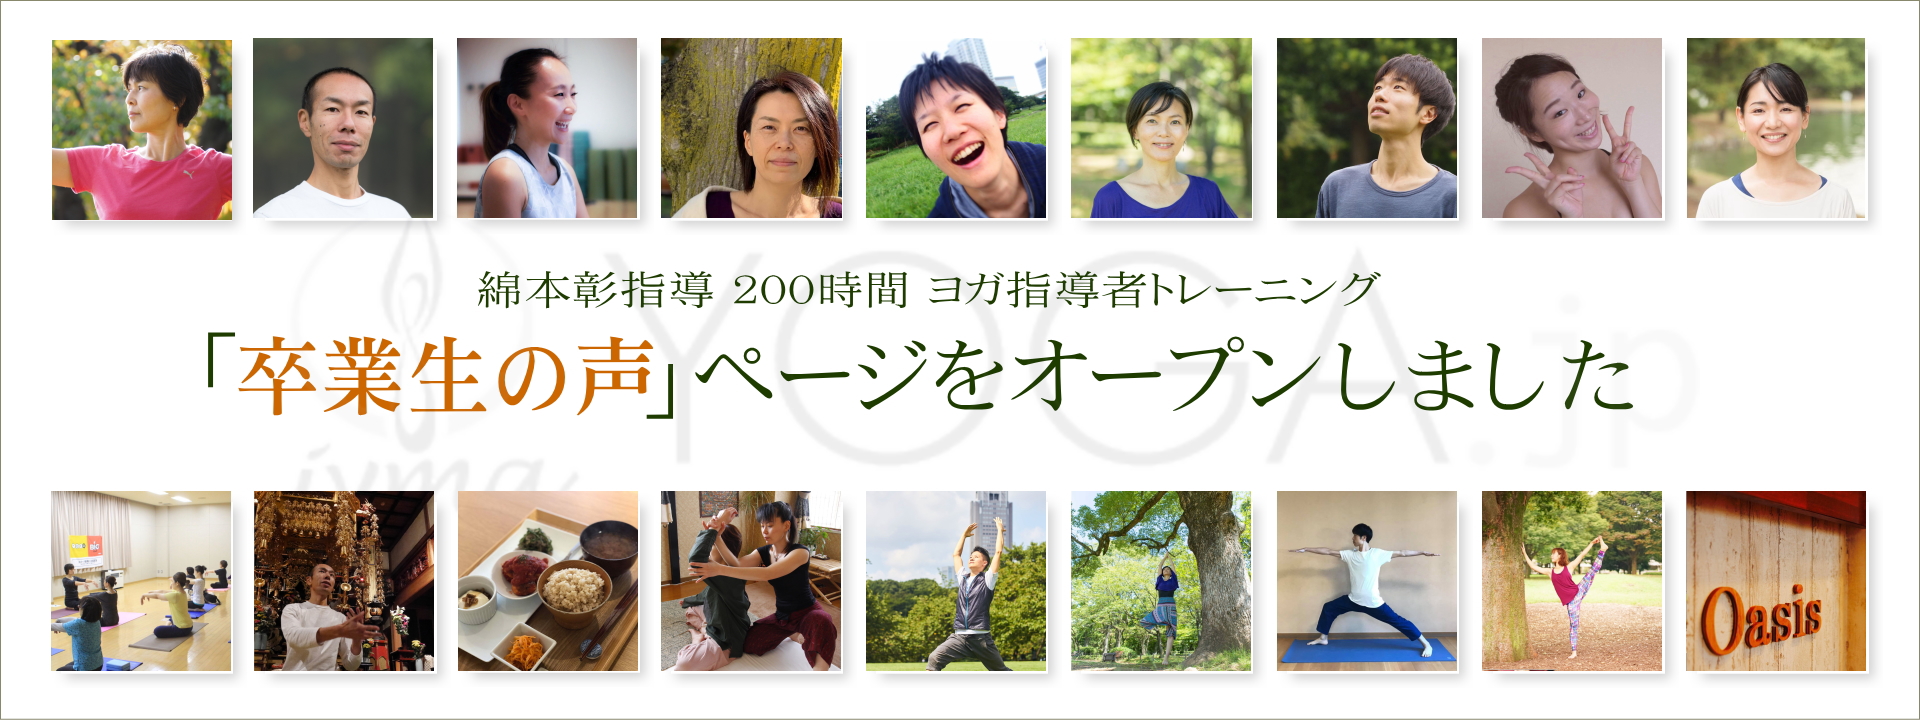 日本ヨーガ瞑想協会主催 ヨガ指導者資格取得講座